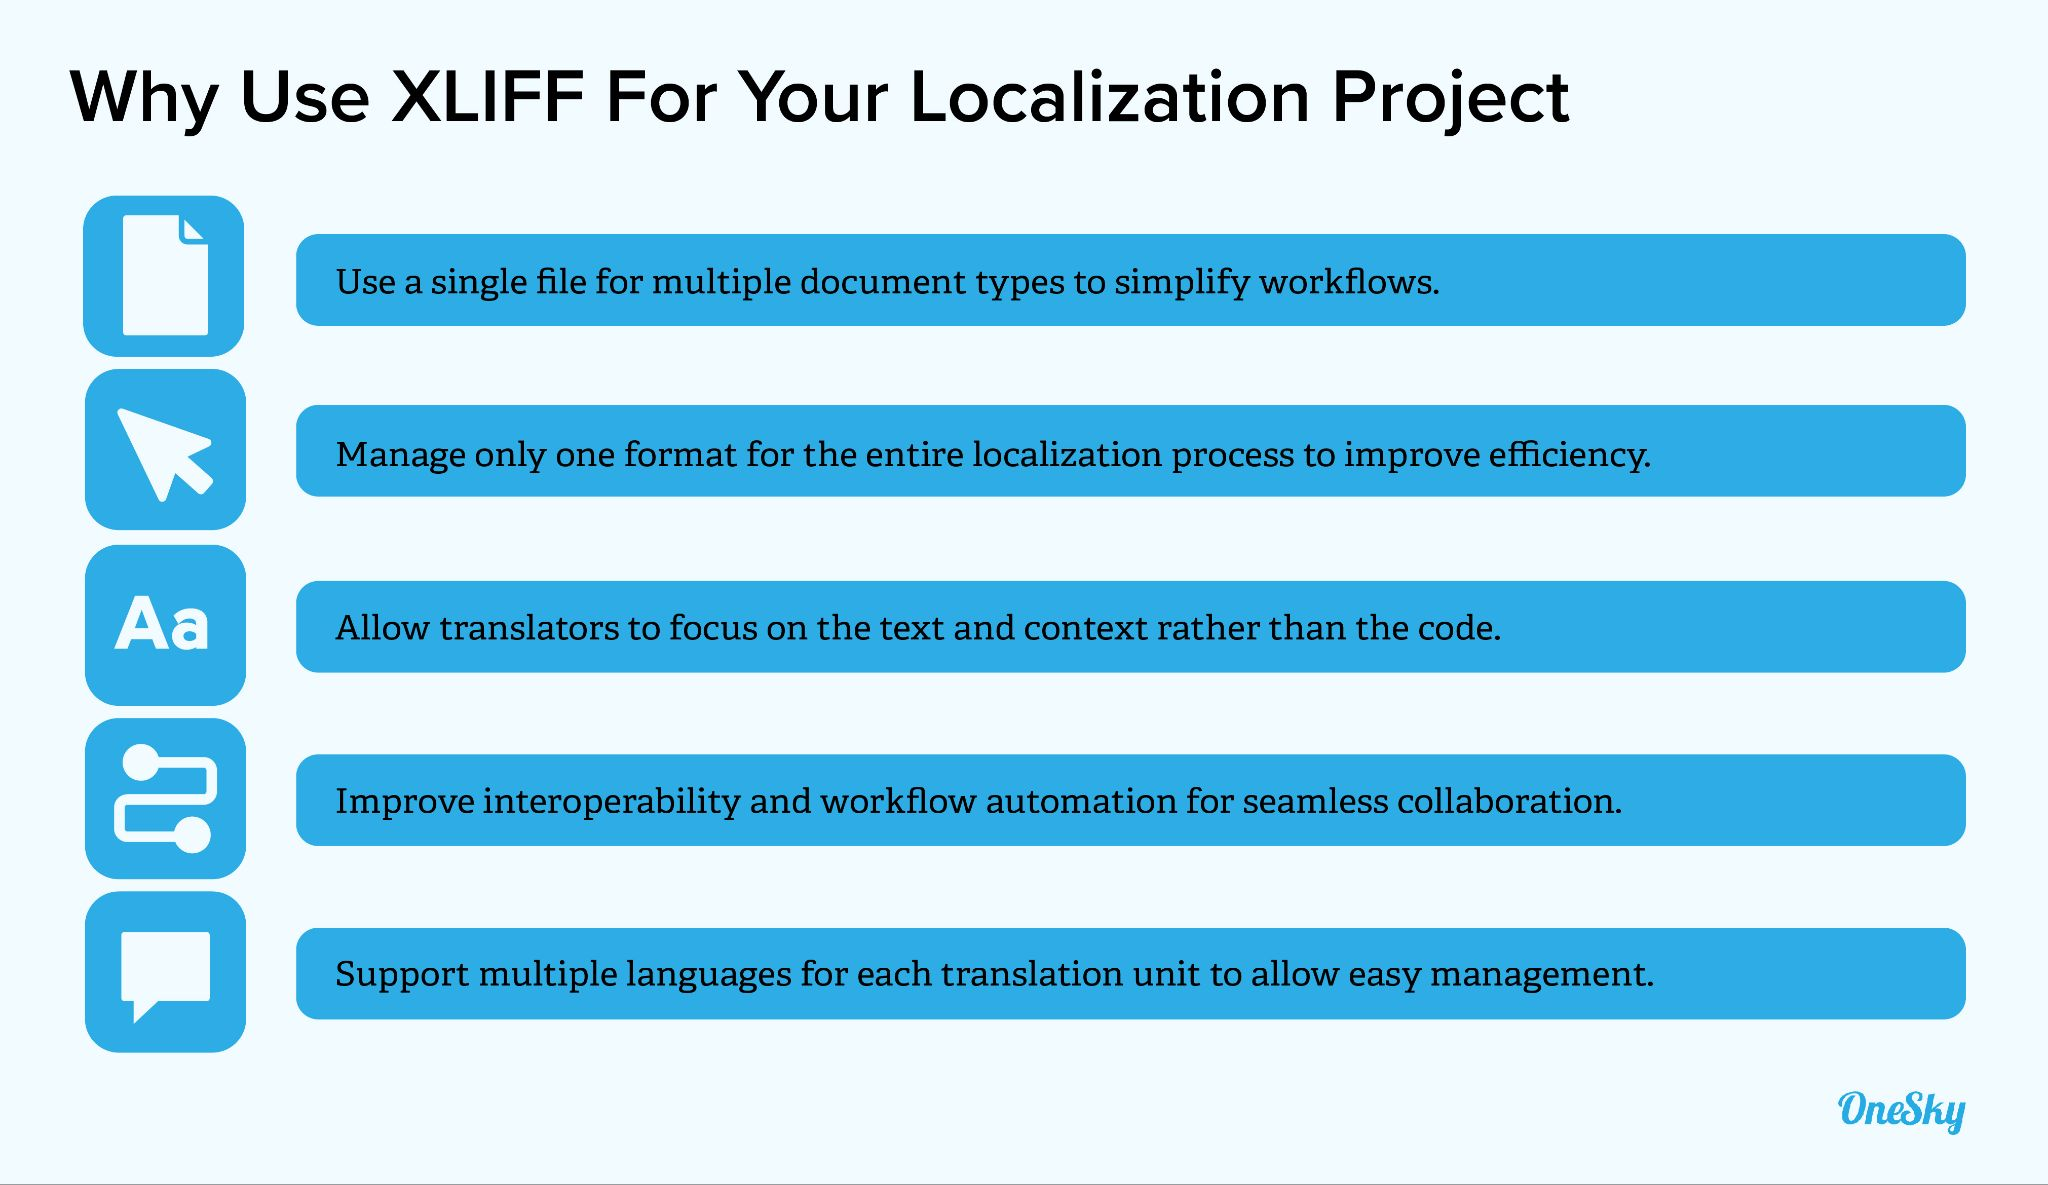 The Benefits of Using XLIFF